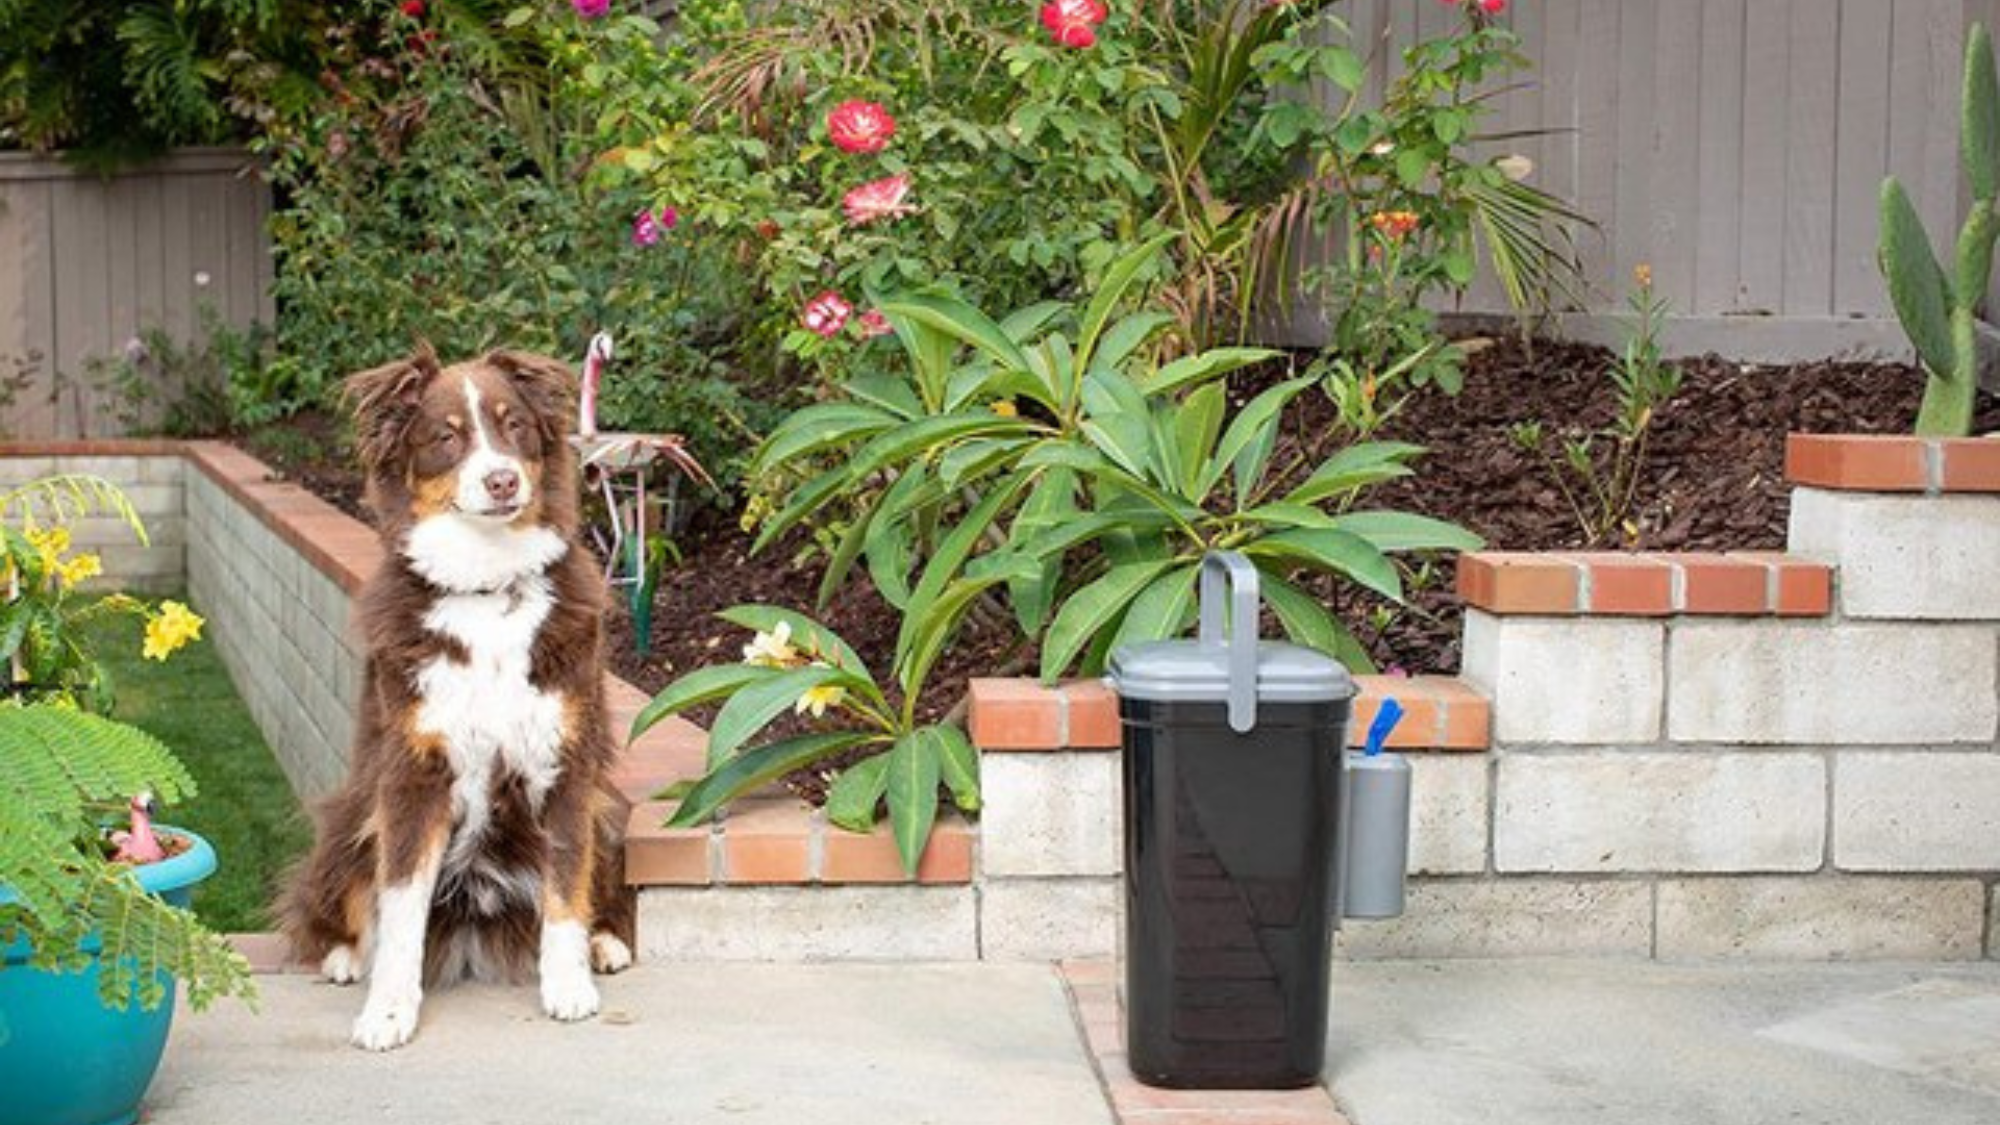 Outdoor dog poop trash can